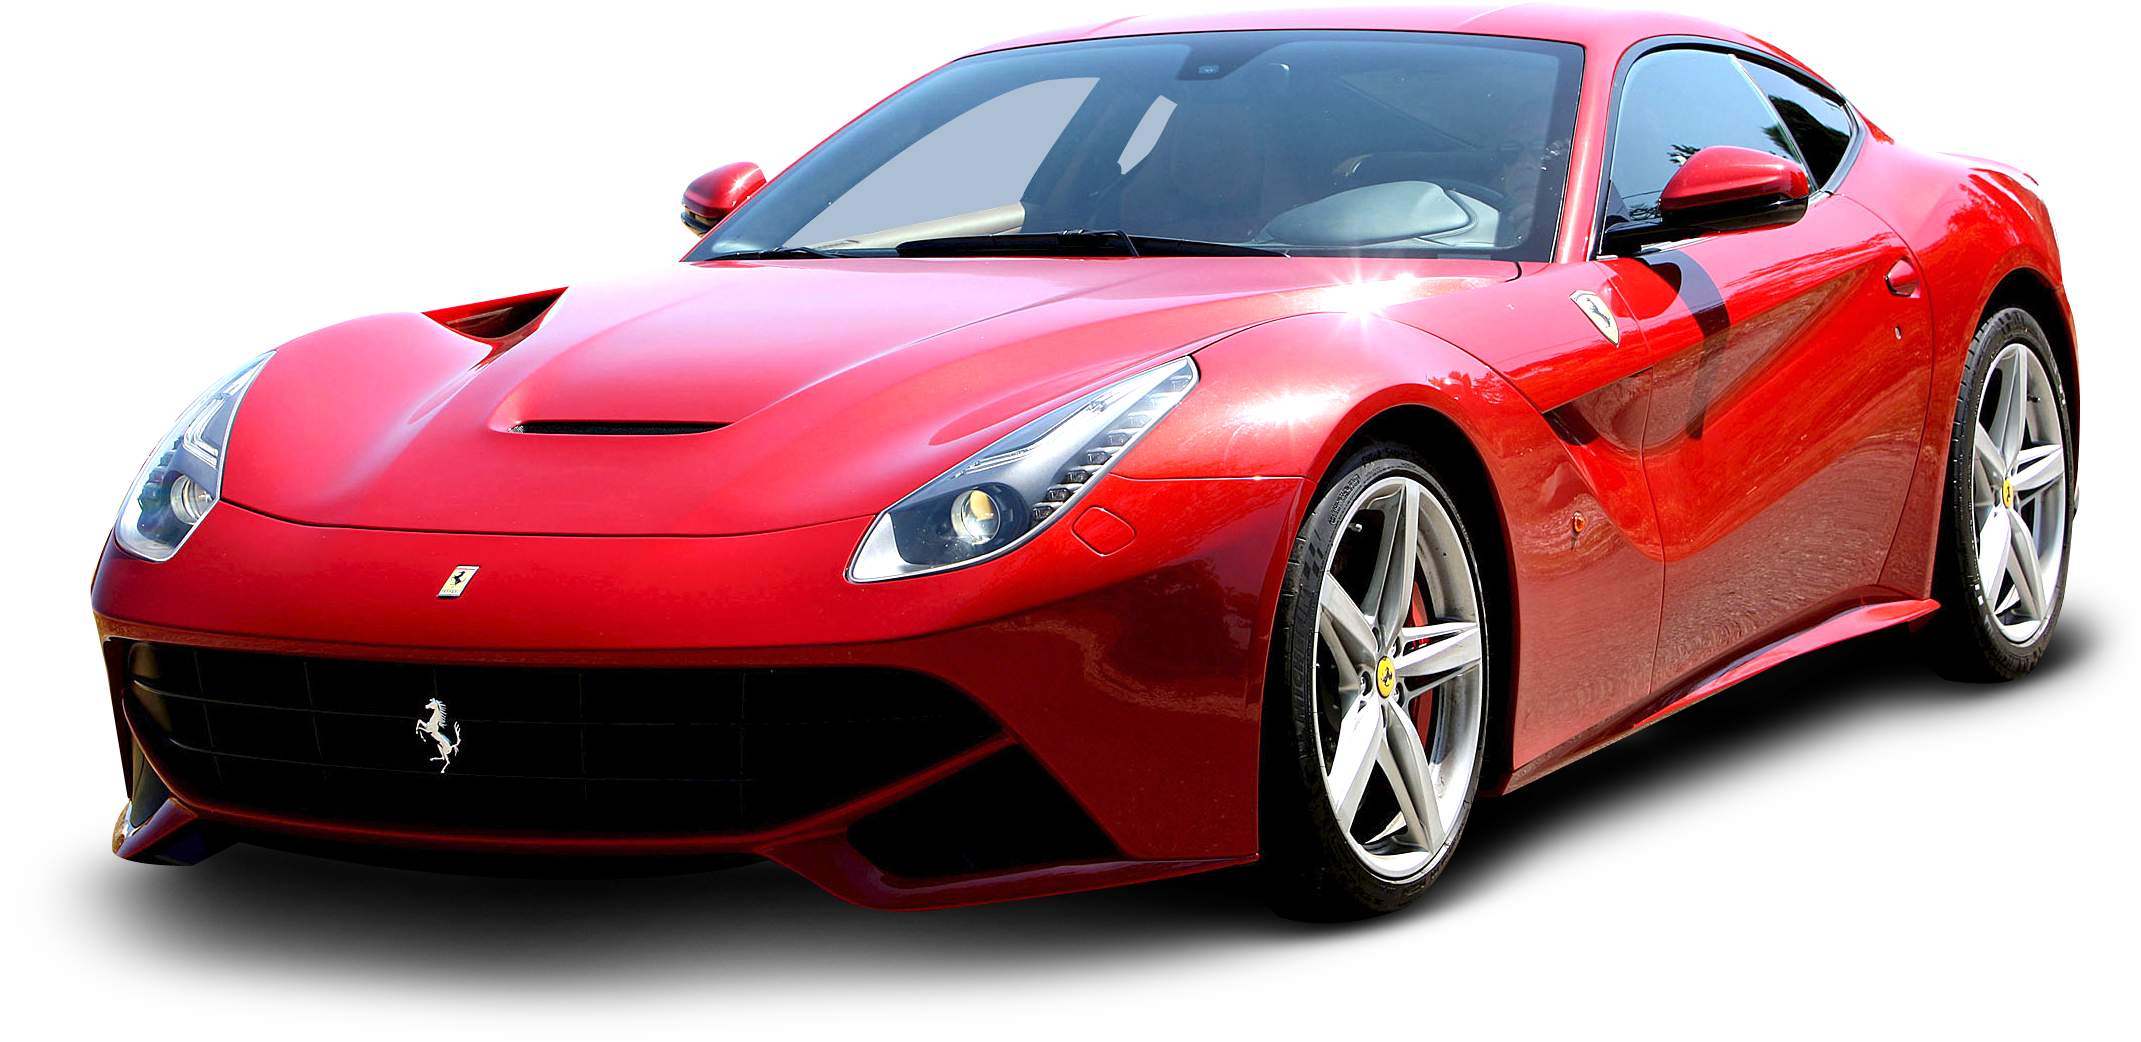 Red Ferrari Sports Car Isolated